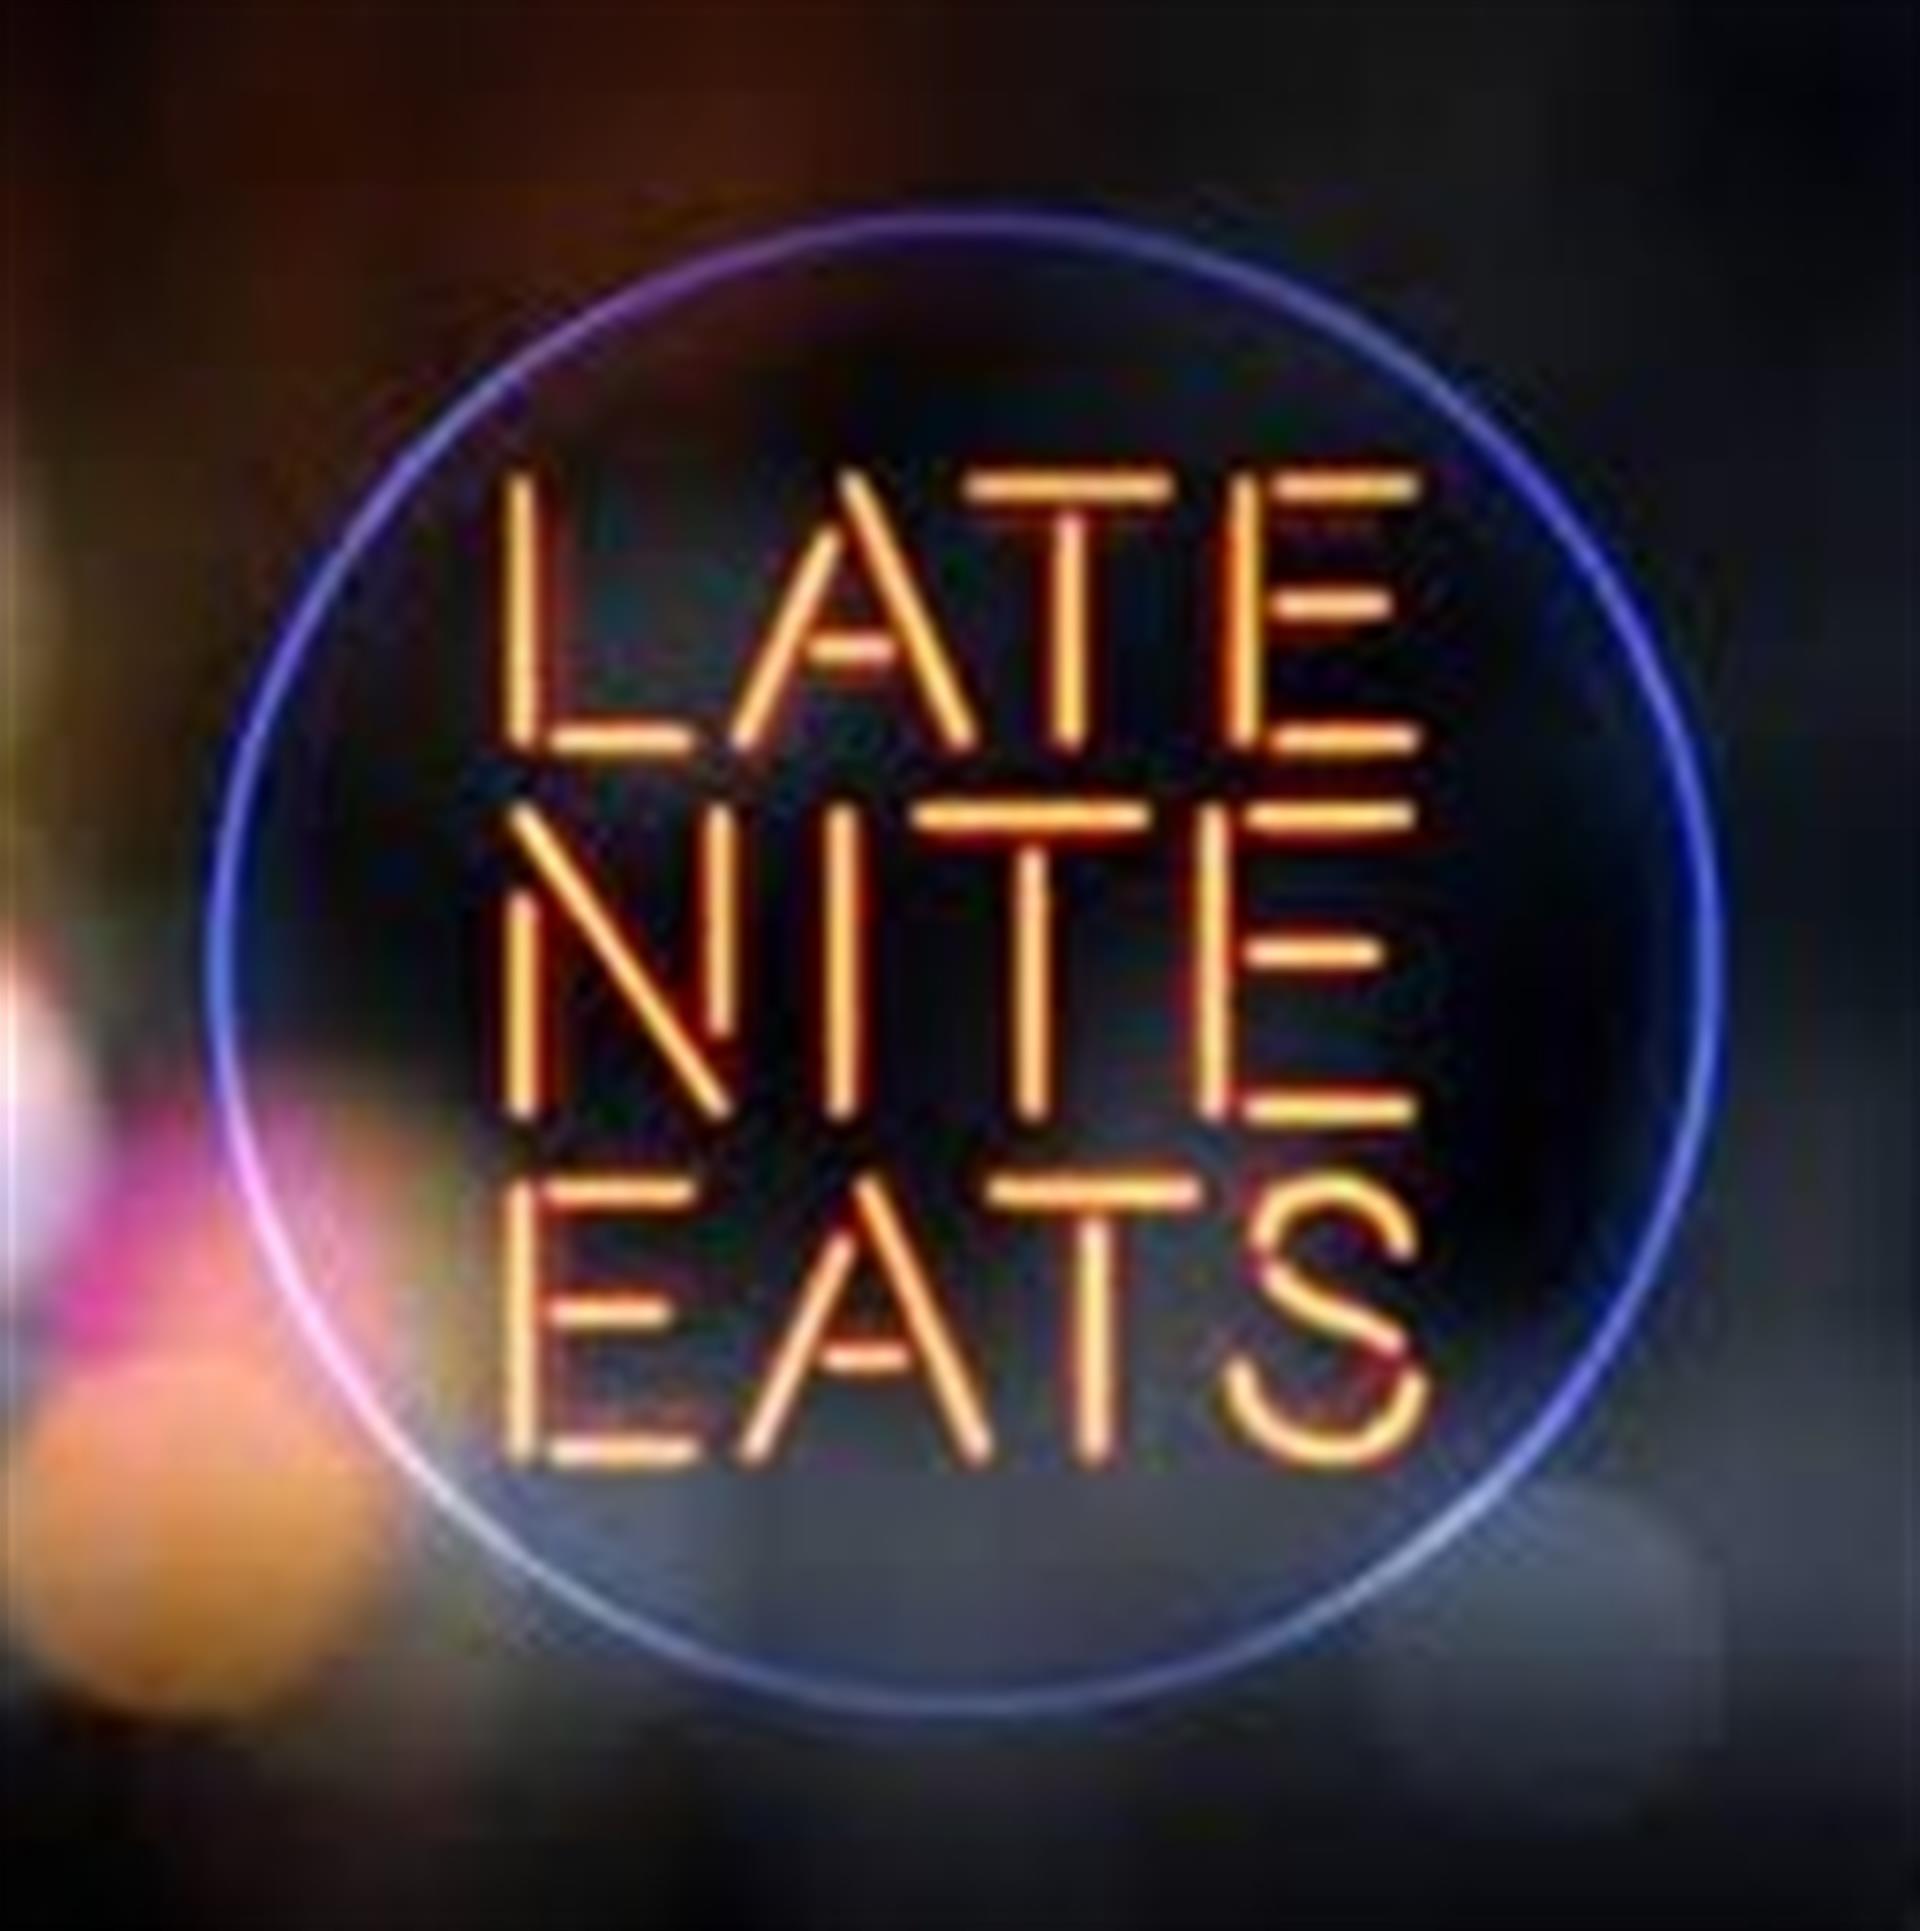 Late night eats